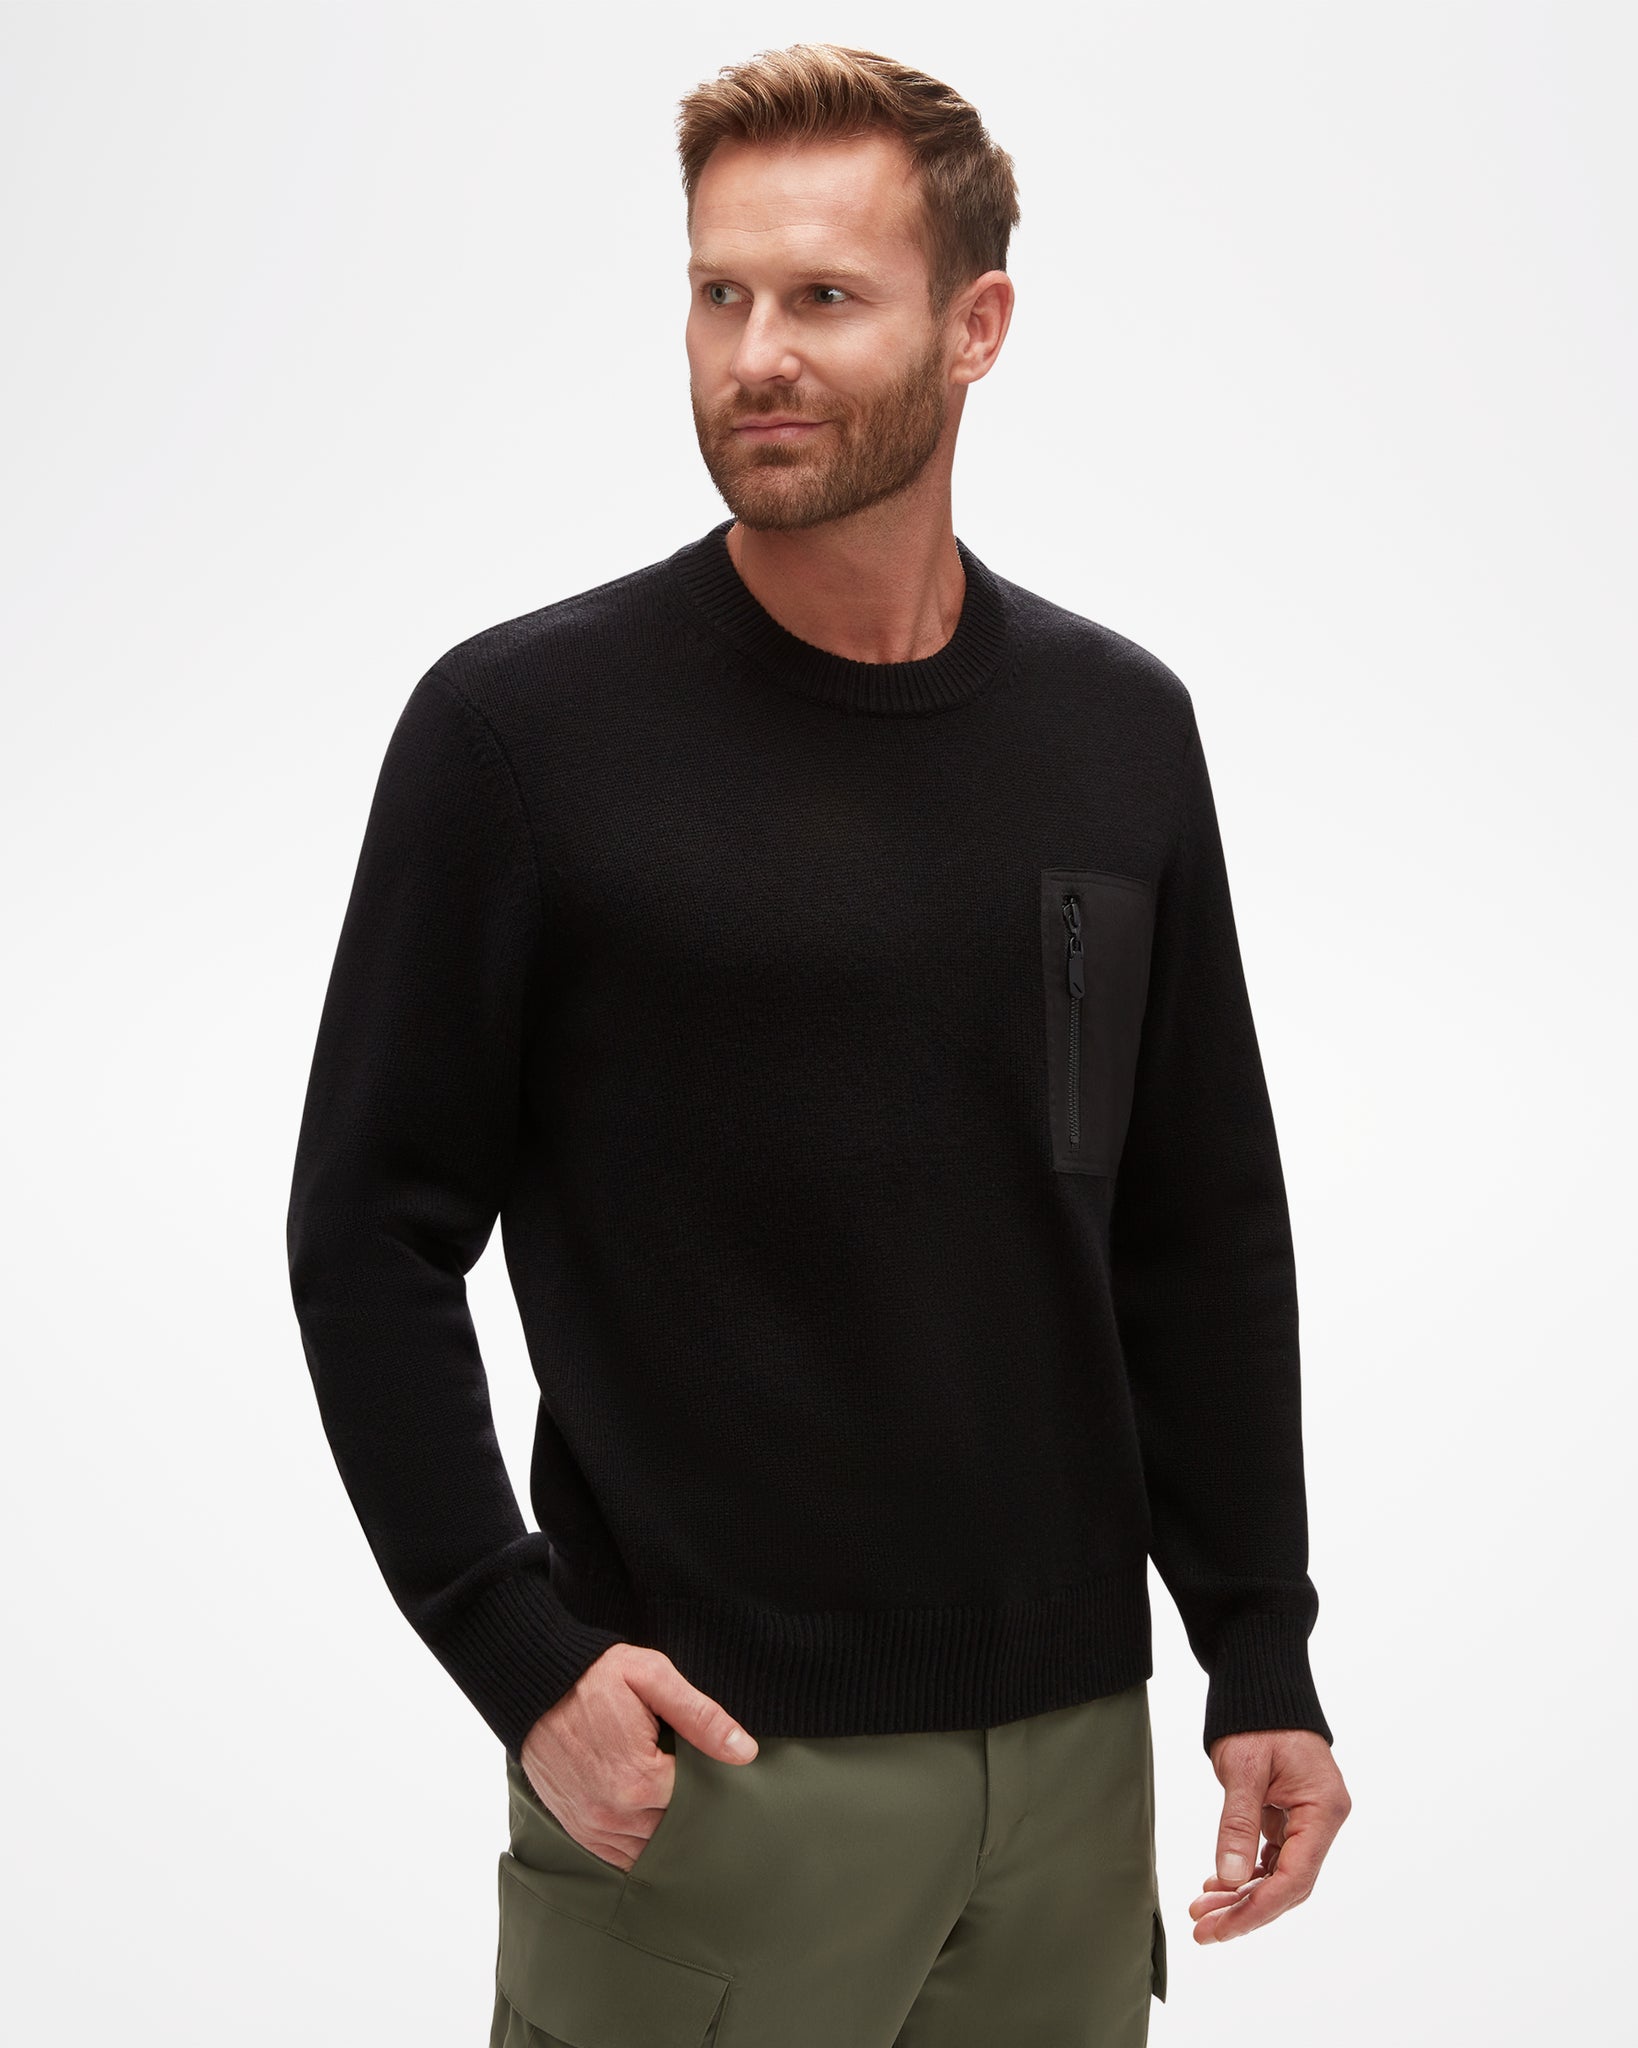 Rayburn Men's Cashmere Sweater